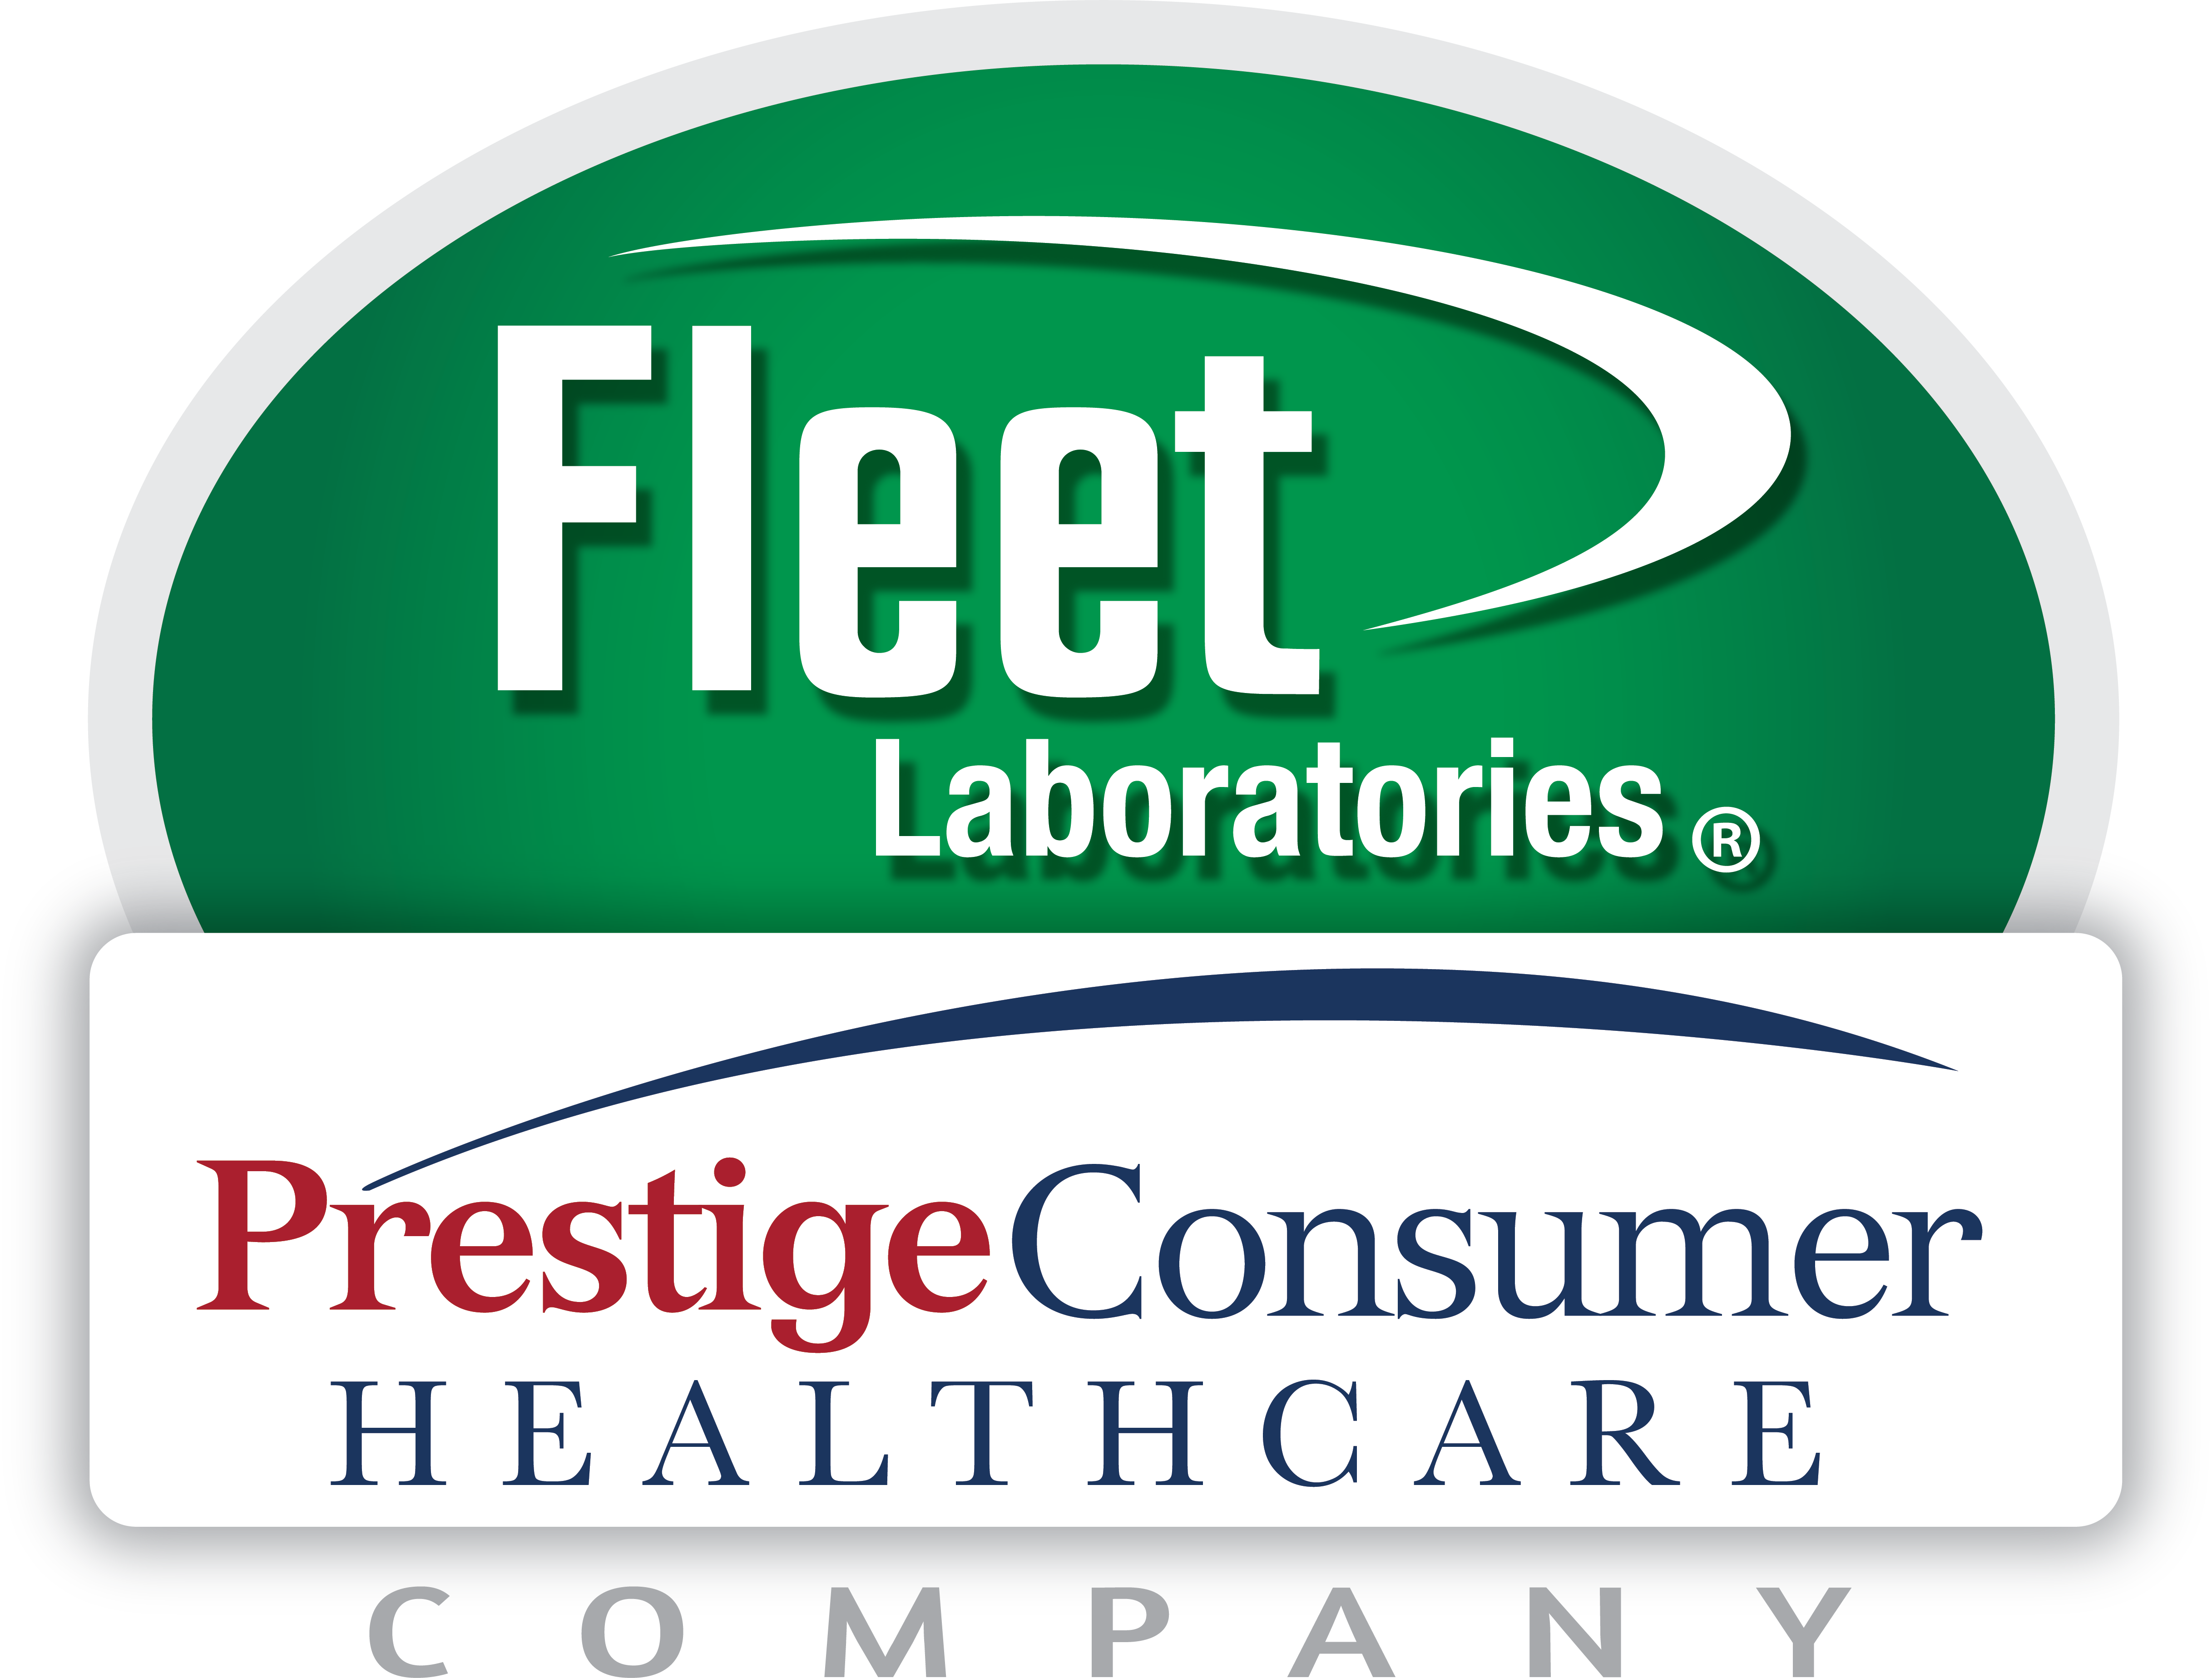 logo for Fleet Laboratories